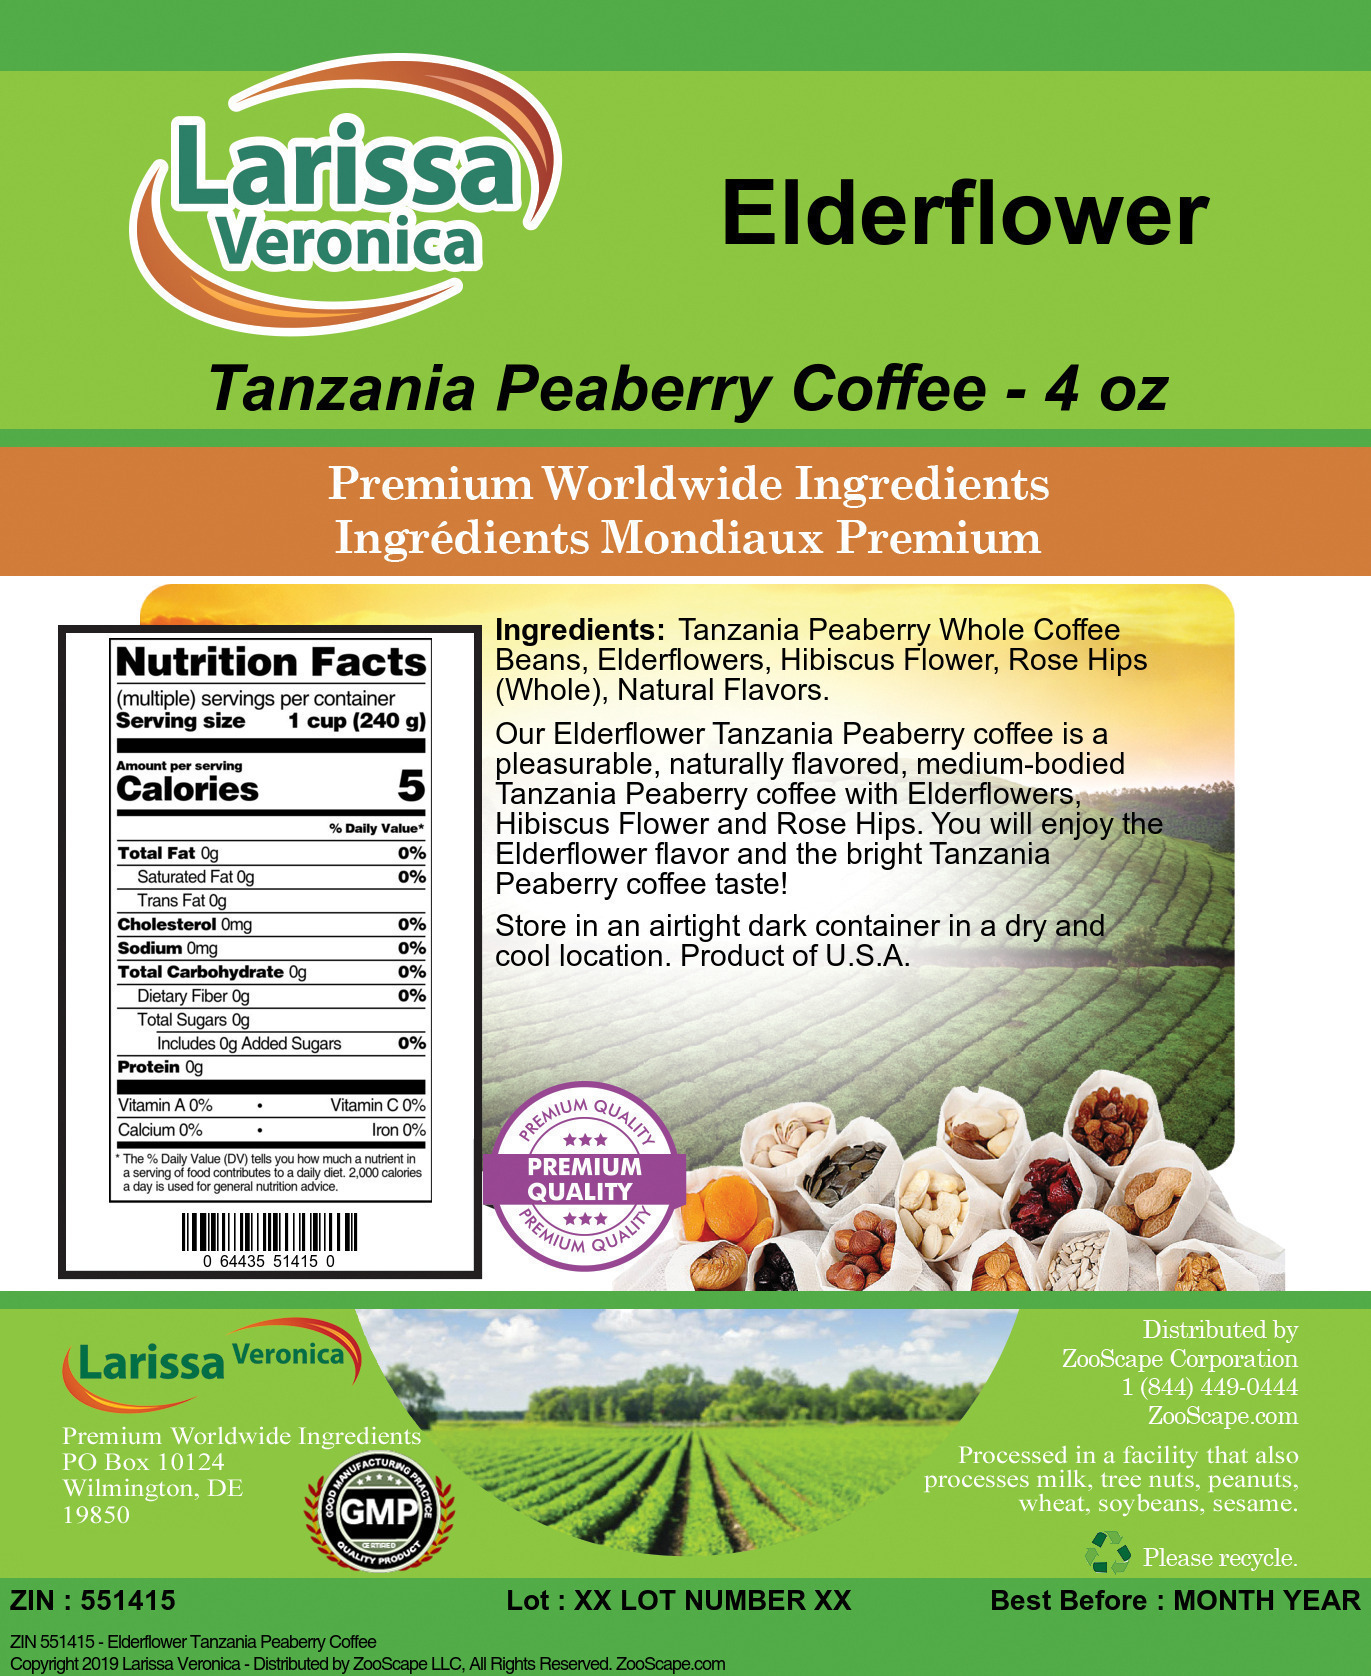 Elderflower Tanzania Peaberry Coffee - Label